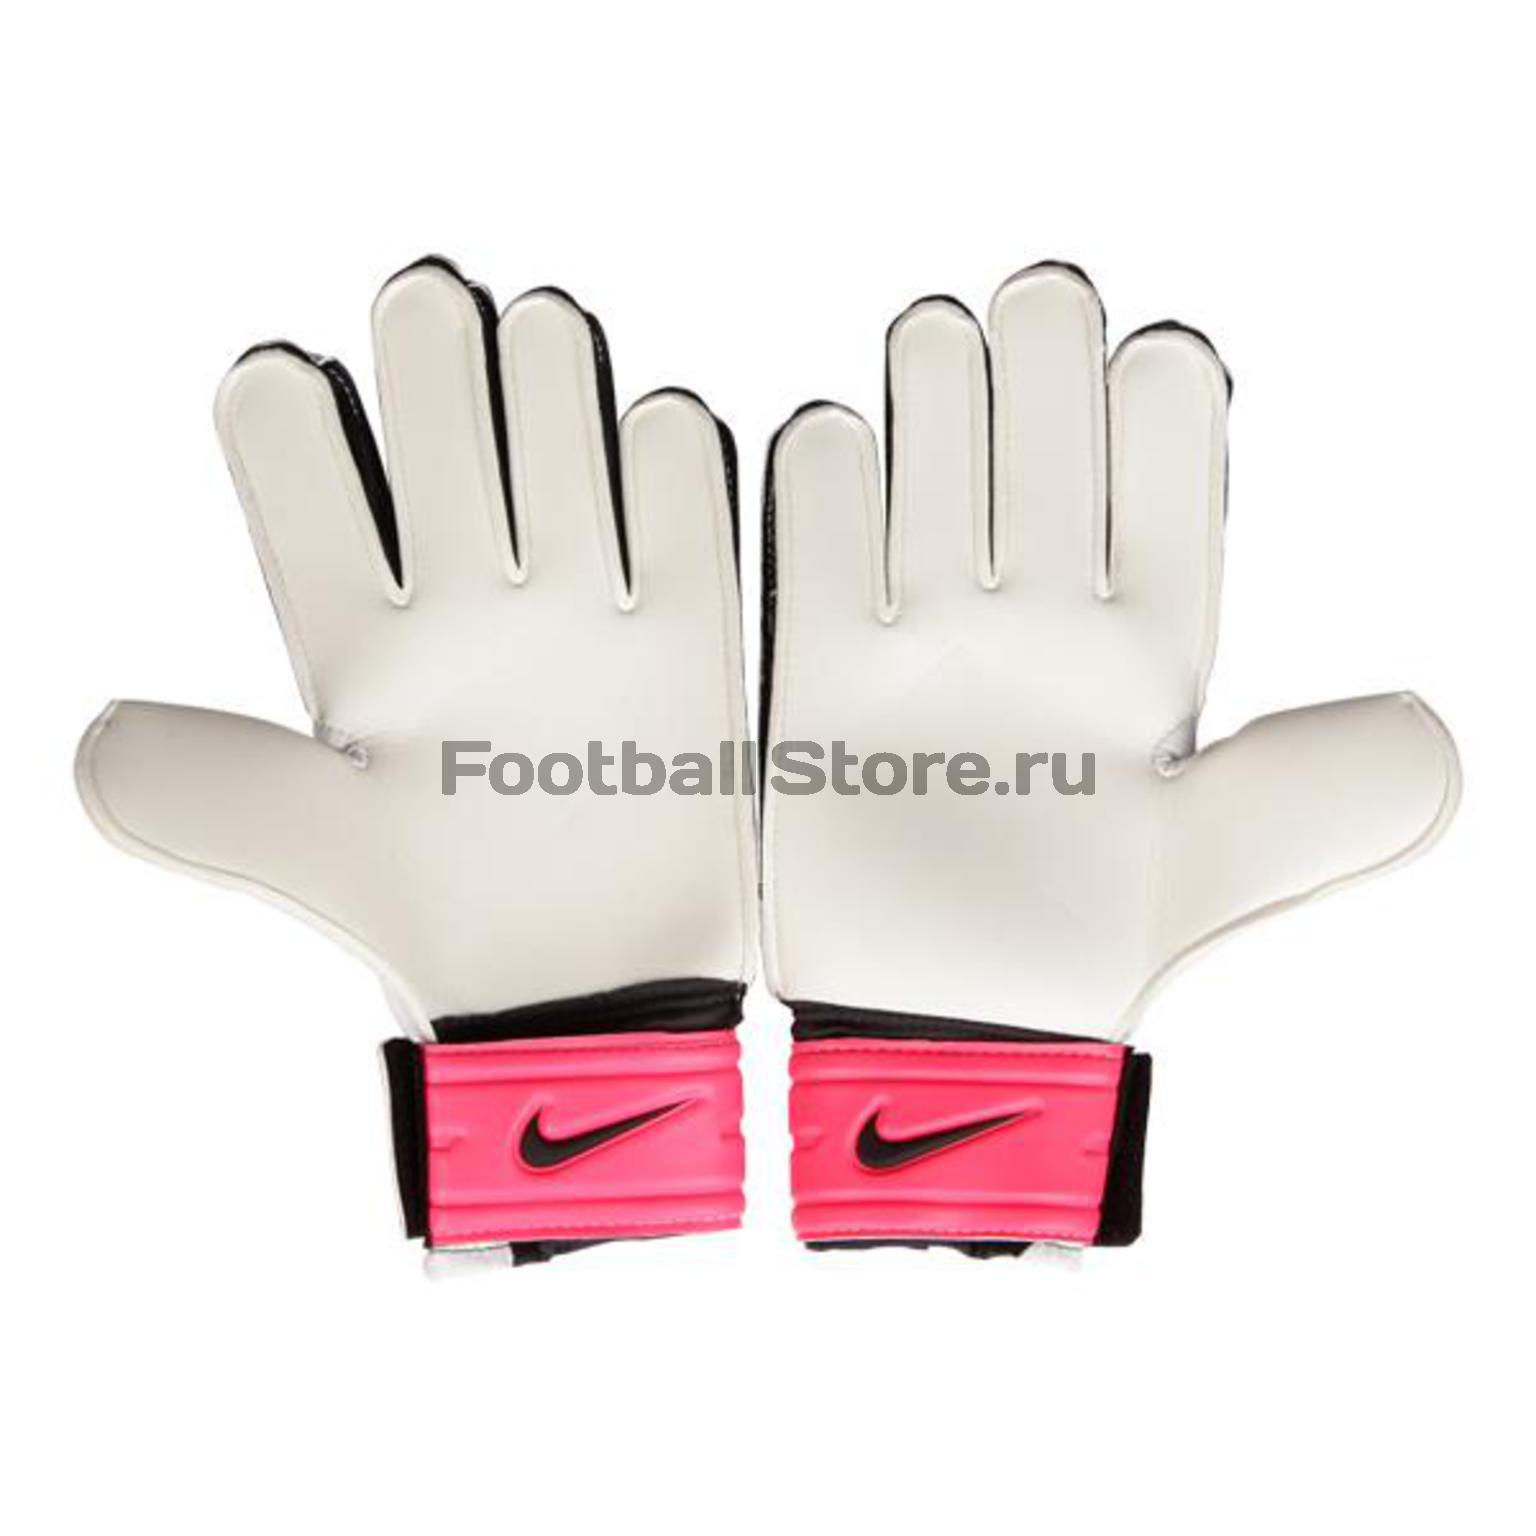 Вратарские перчатки Nike gk classic